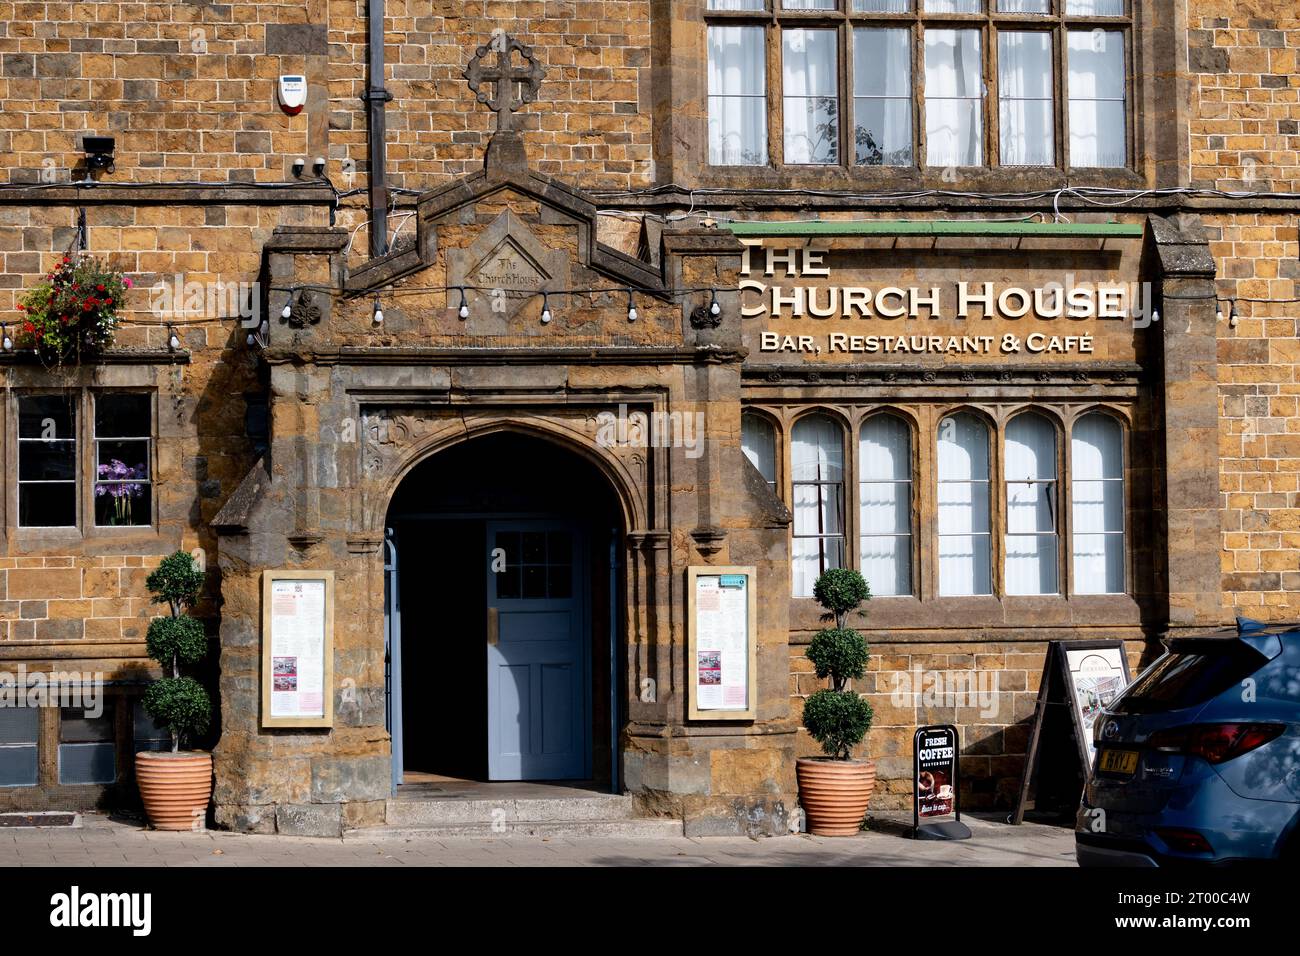 The Church House bar and restaurant, Banbury, Oxfordshire, England, UK Stock Photo